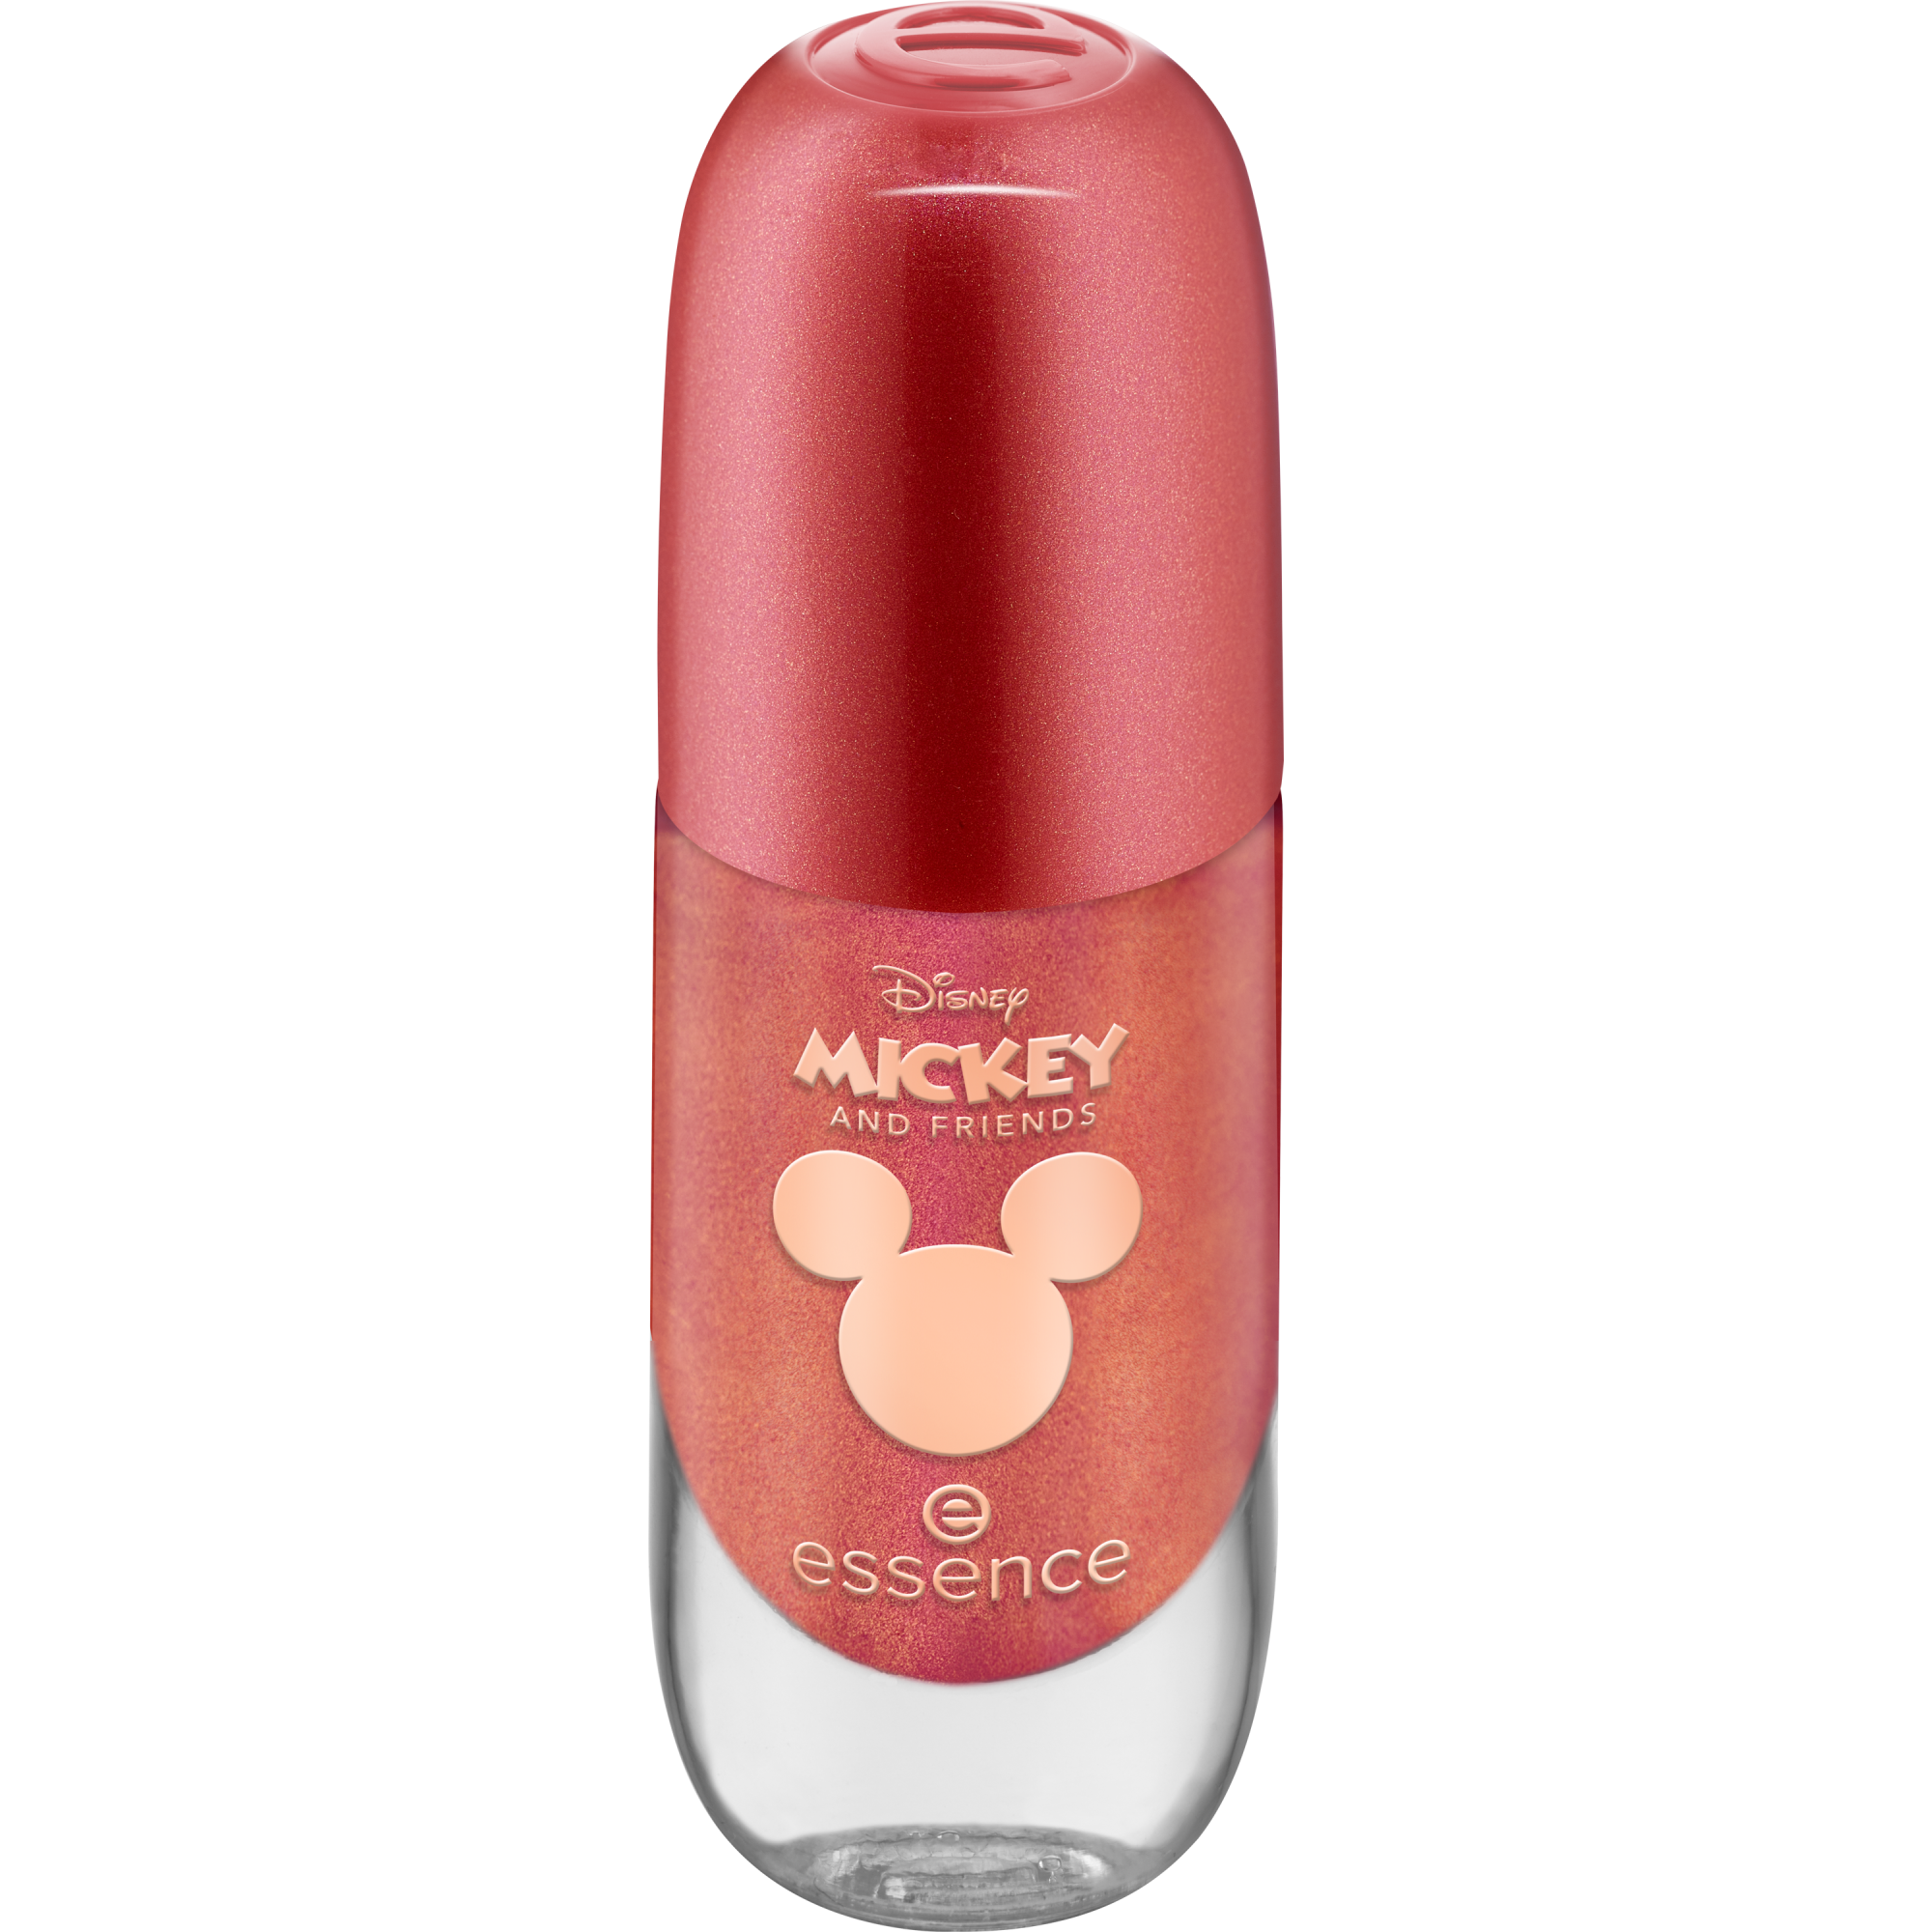 Disney Mickey and Friends effect nail polish